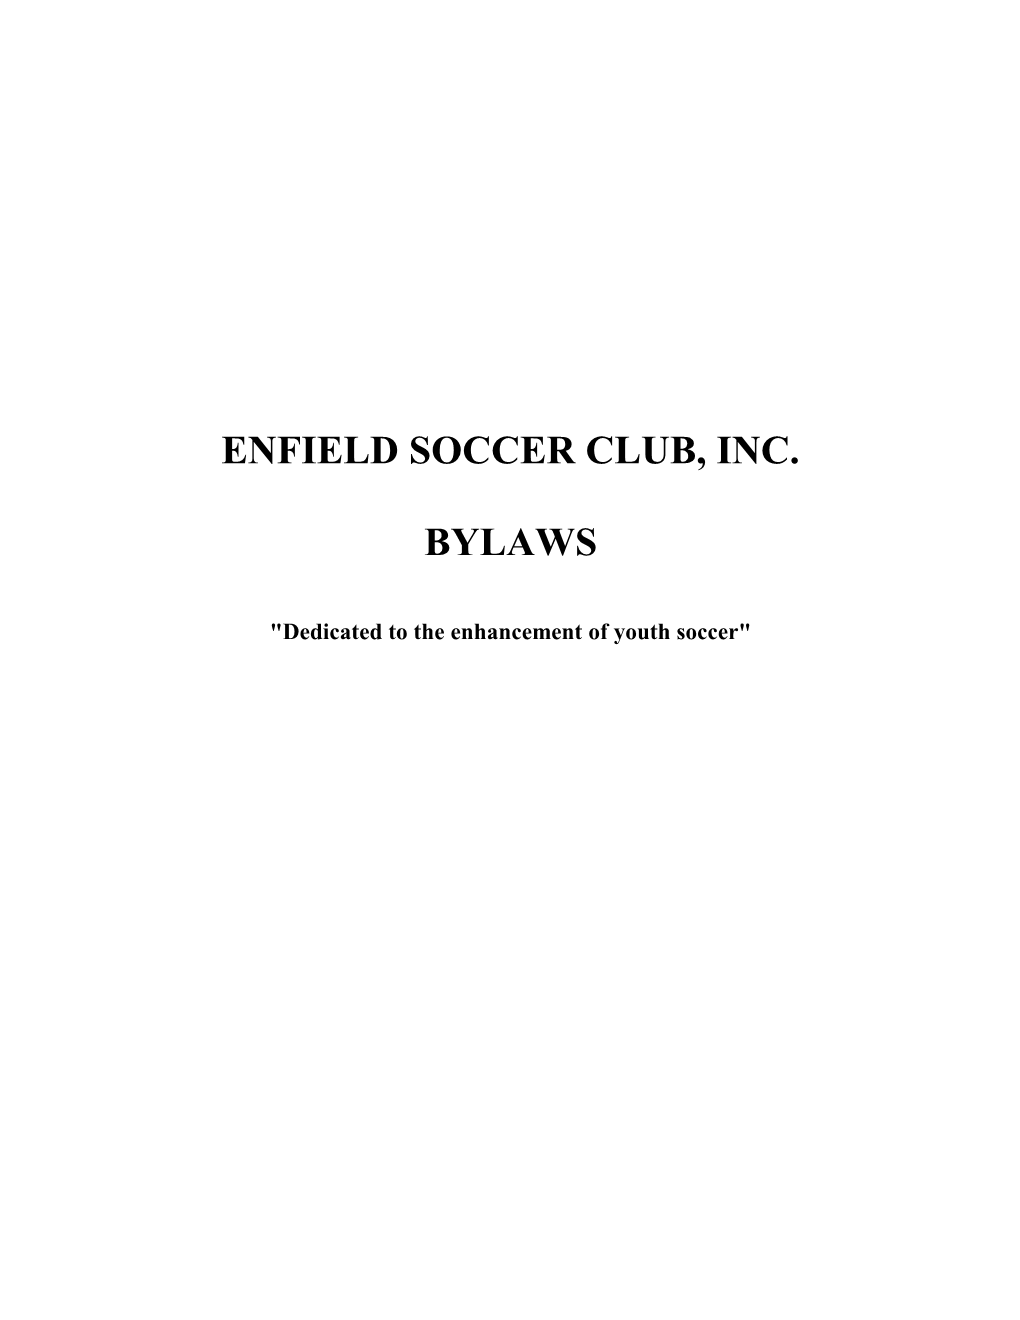 Enfield Soccer Club, Inc